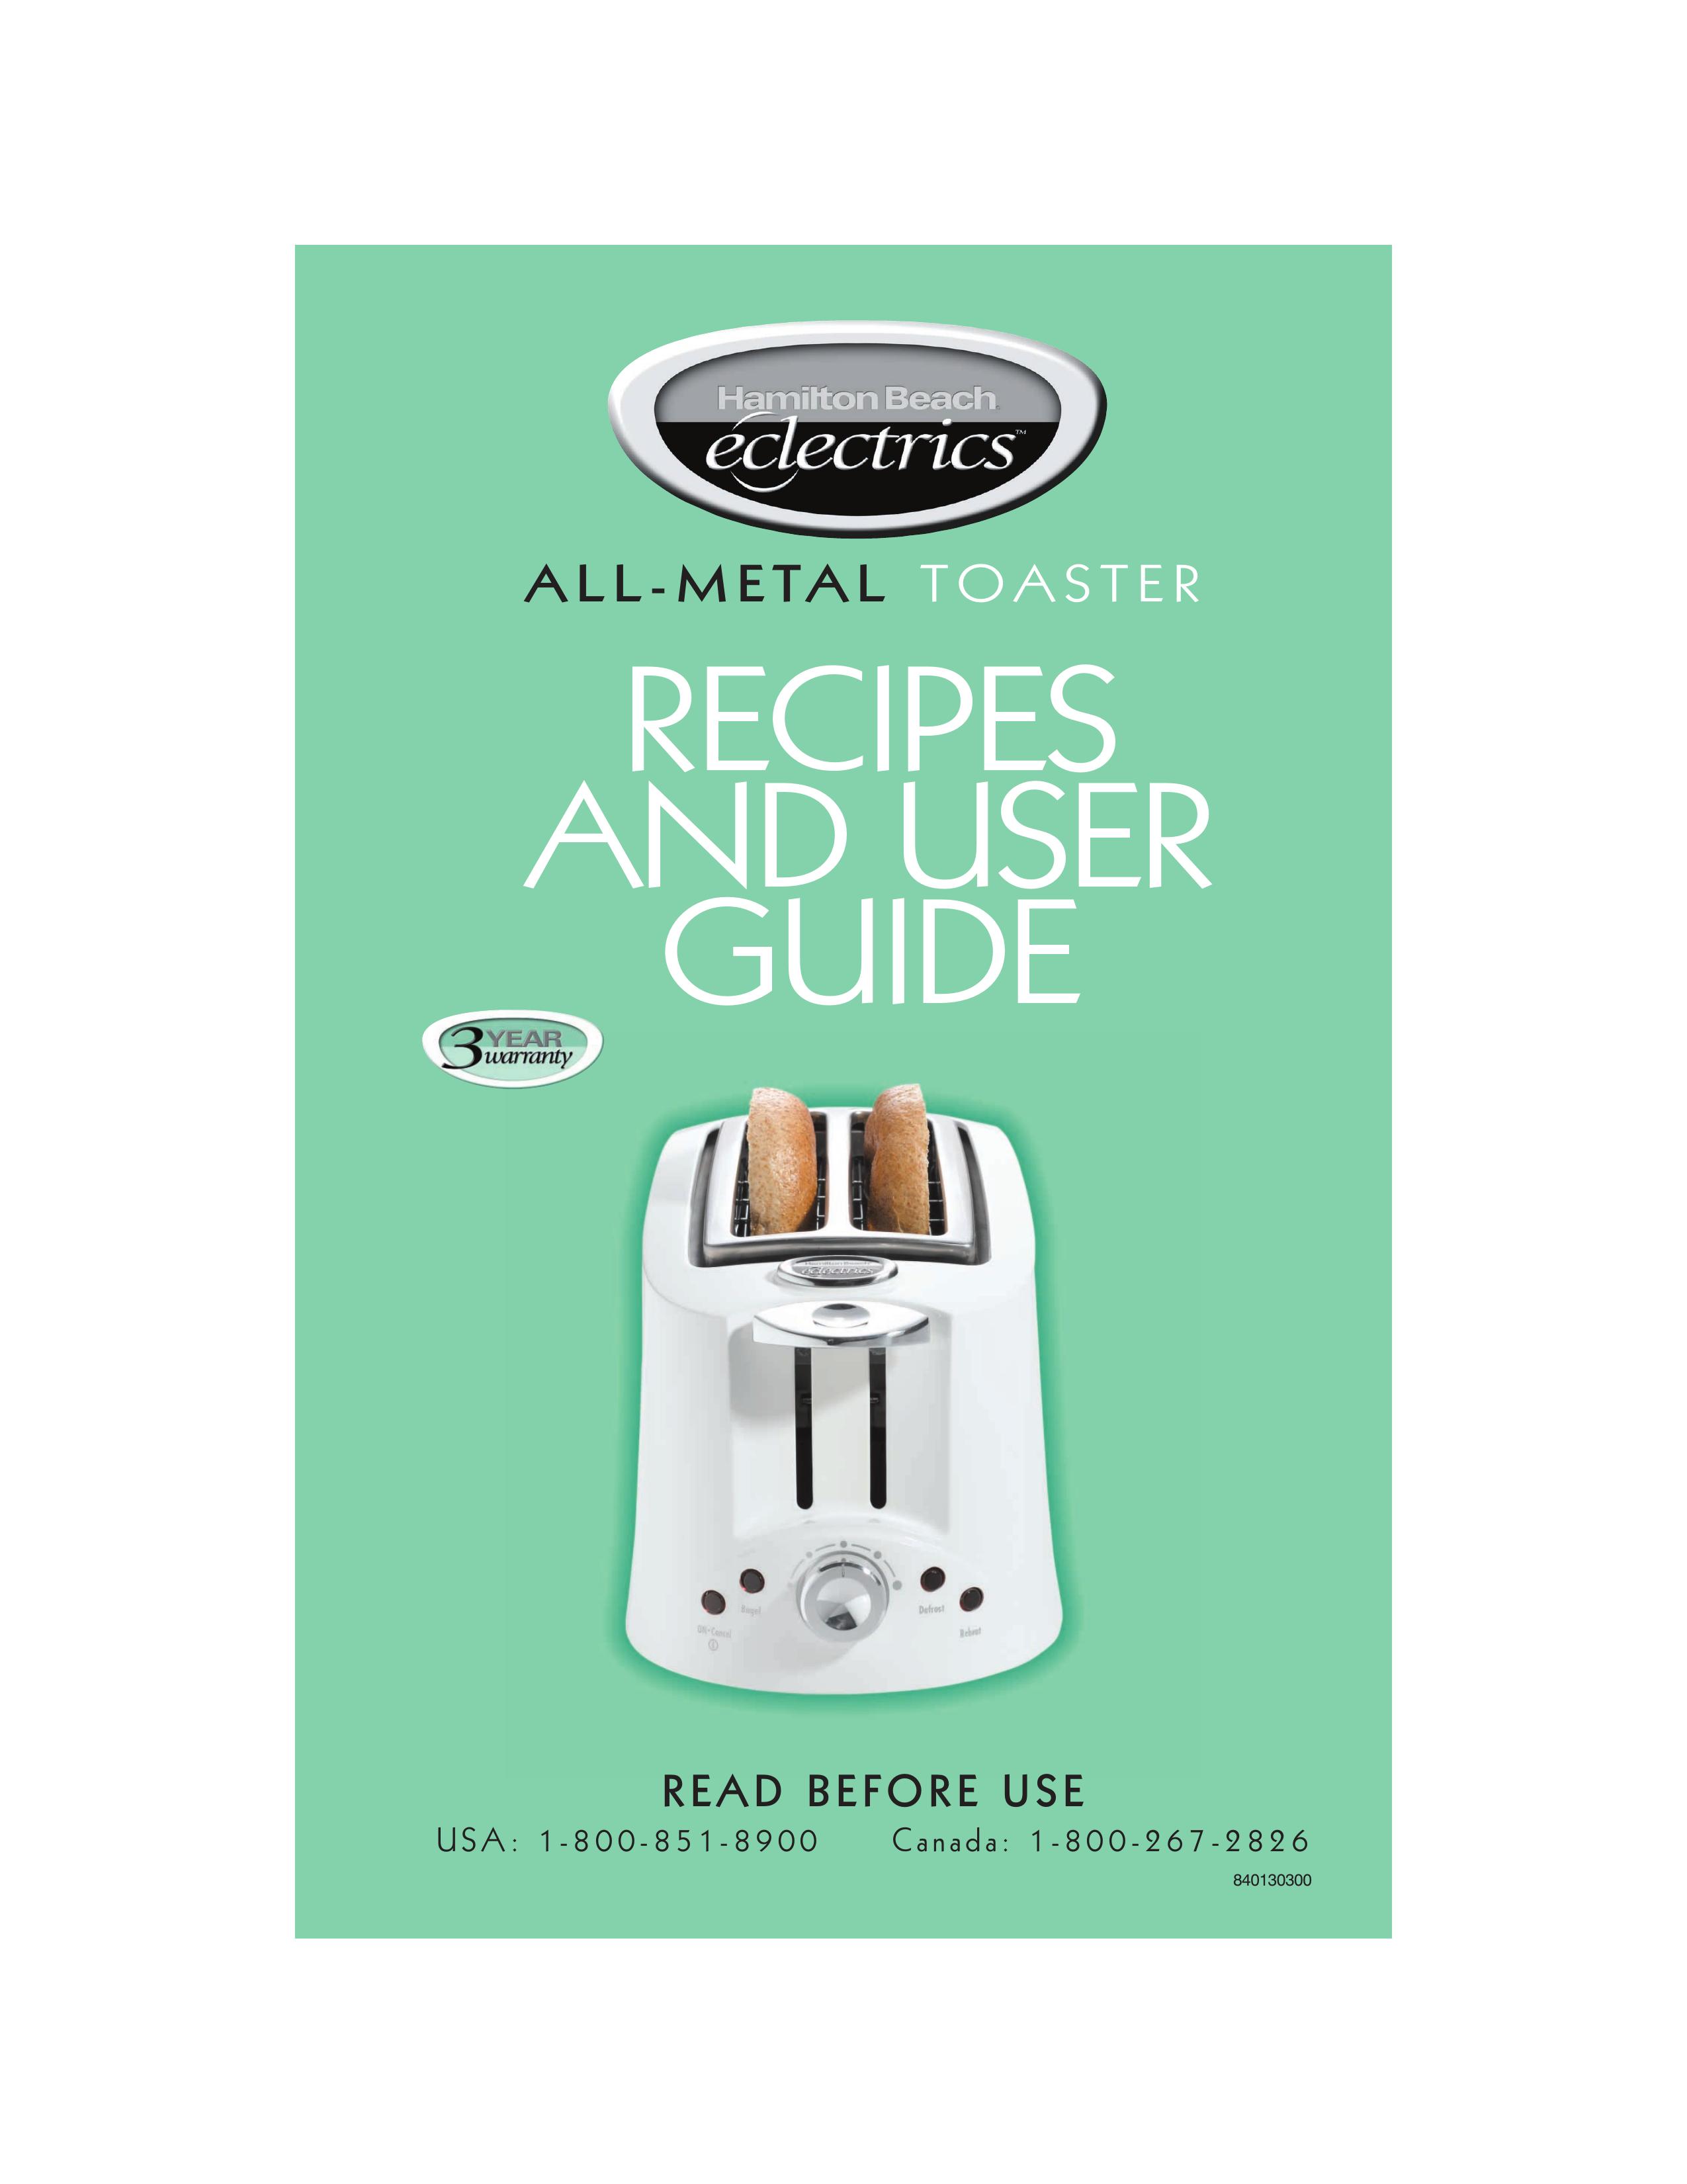 Hamilton Beach All-Metal Toaster Toaster User Manual